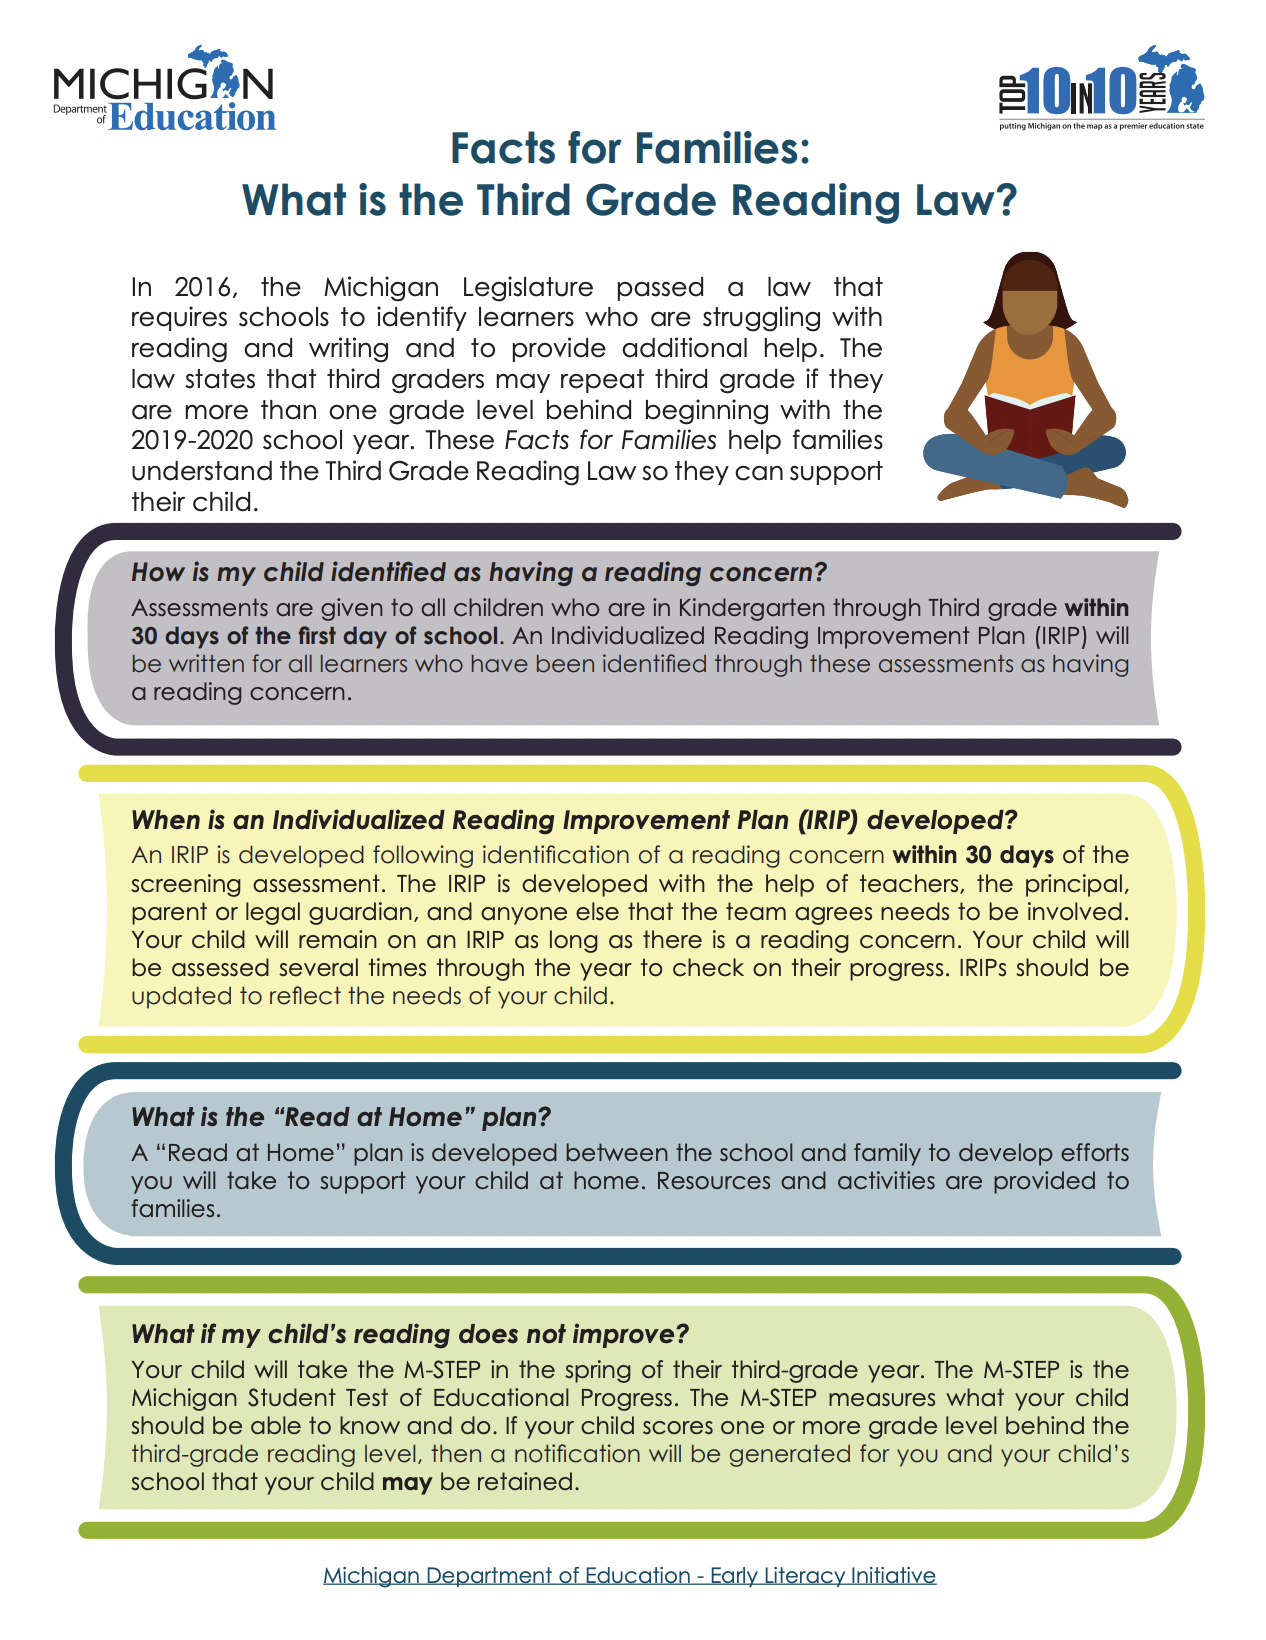 third-grade-reading-infographic